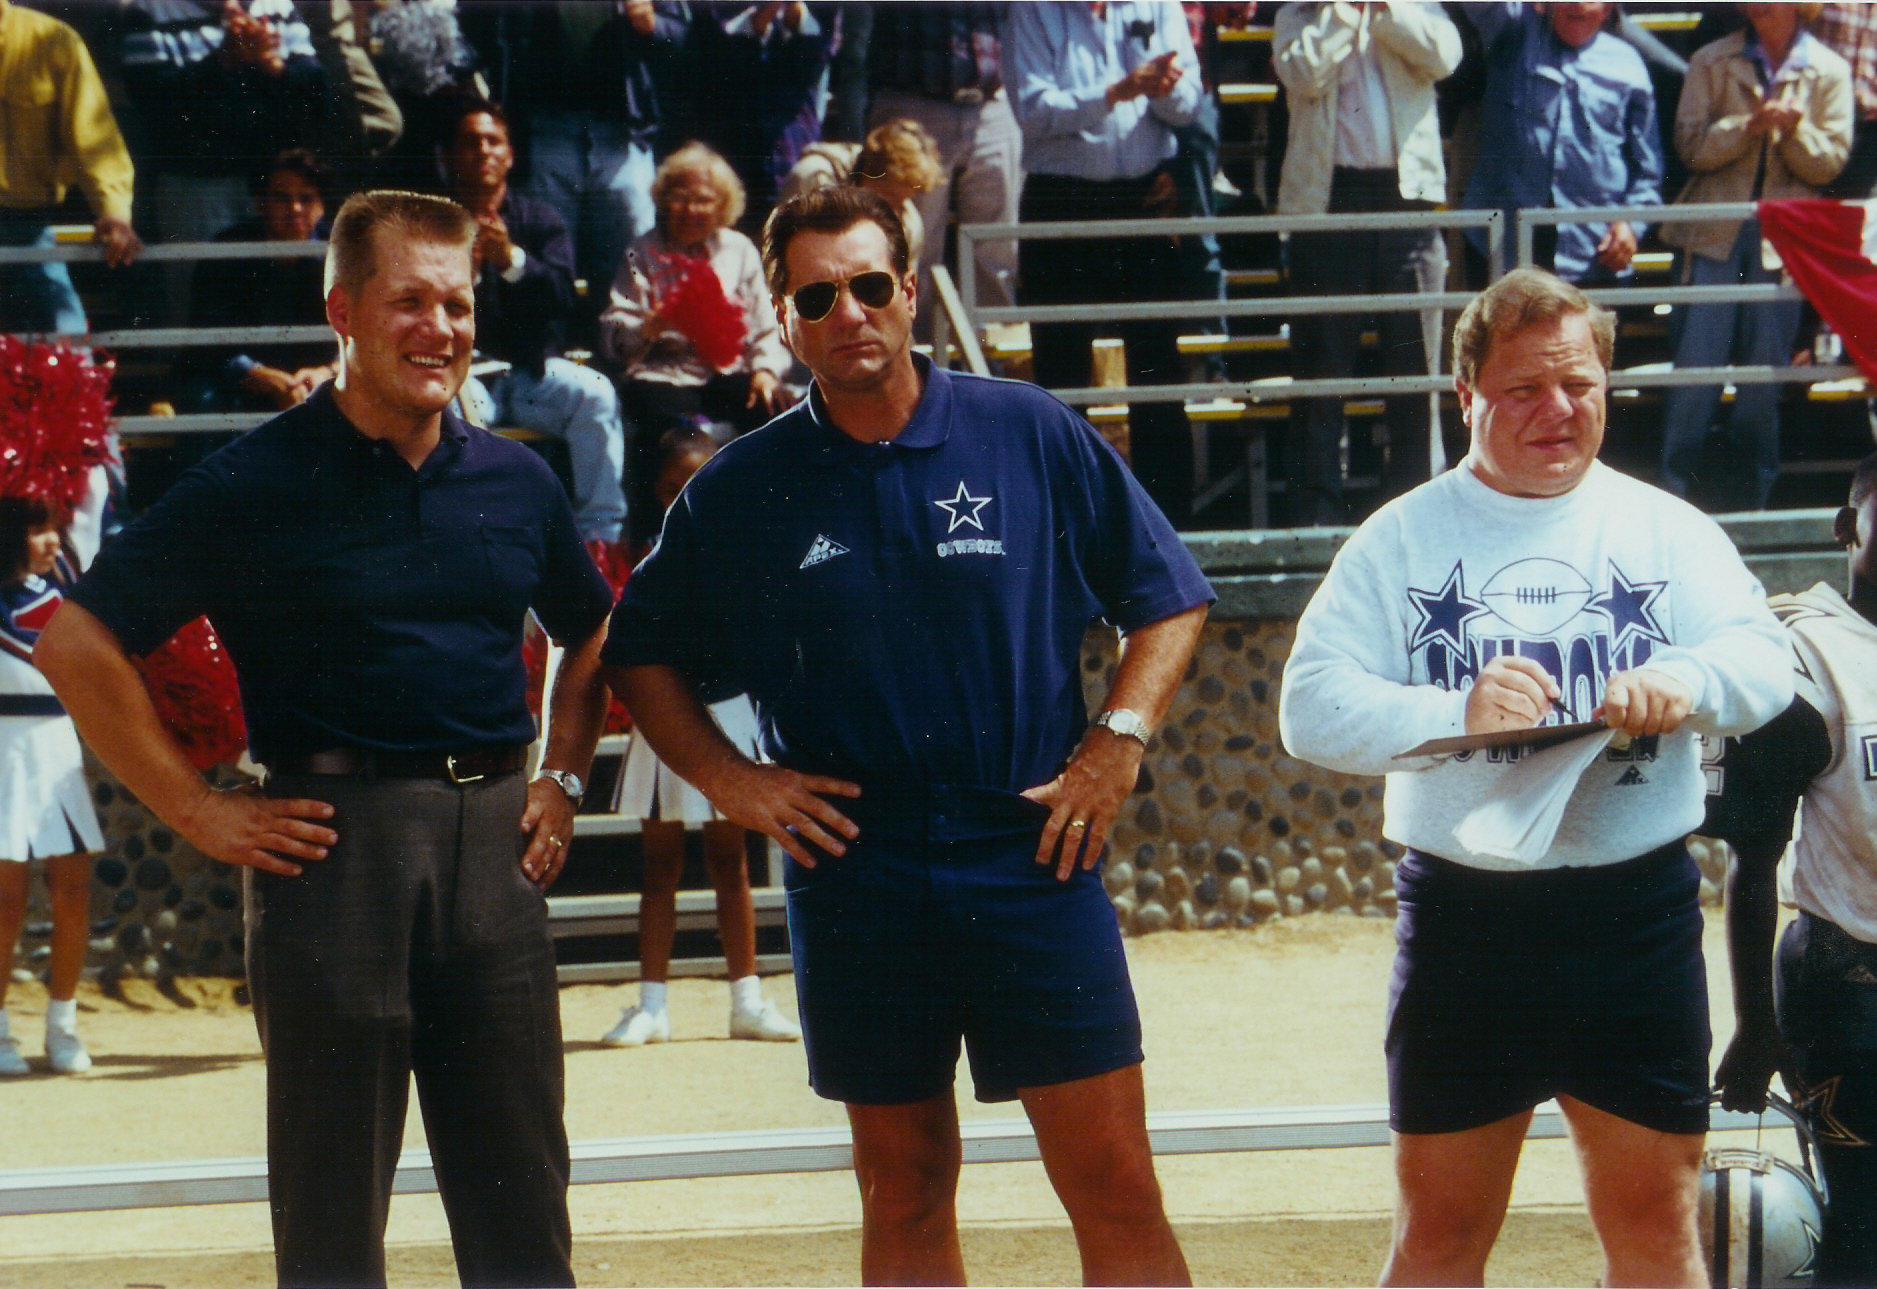 Brian Haley (left) Ed O'Neill (center) Joe Bays (right) in Little Giants